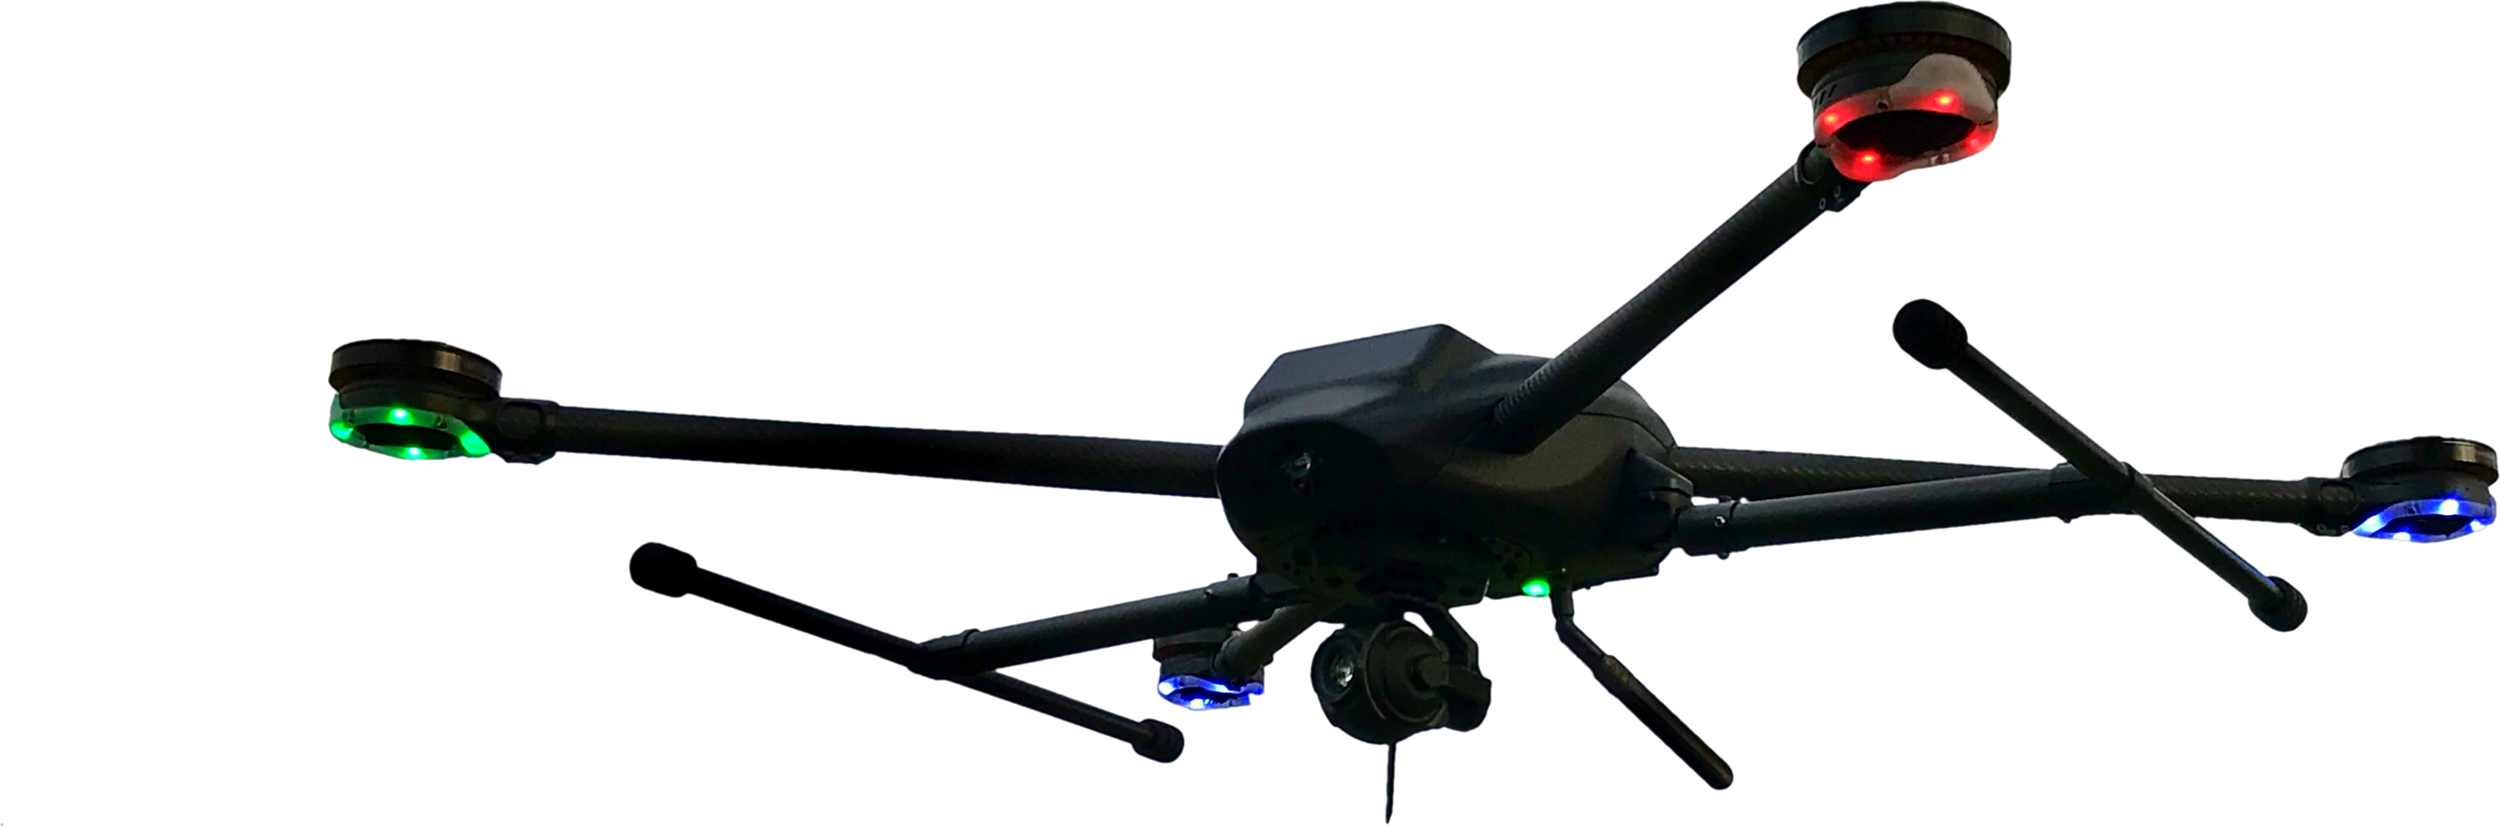 Quadcopter PNG -Hintergrund